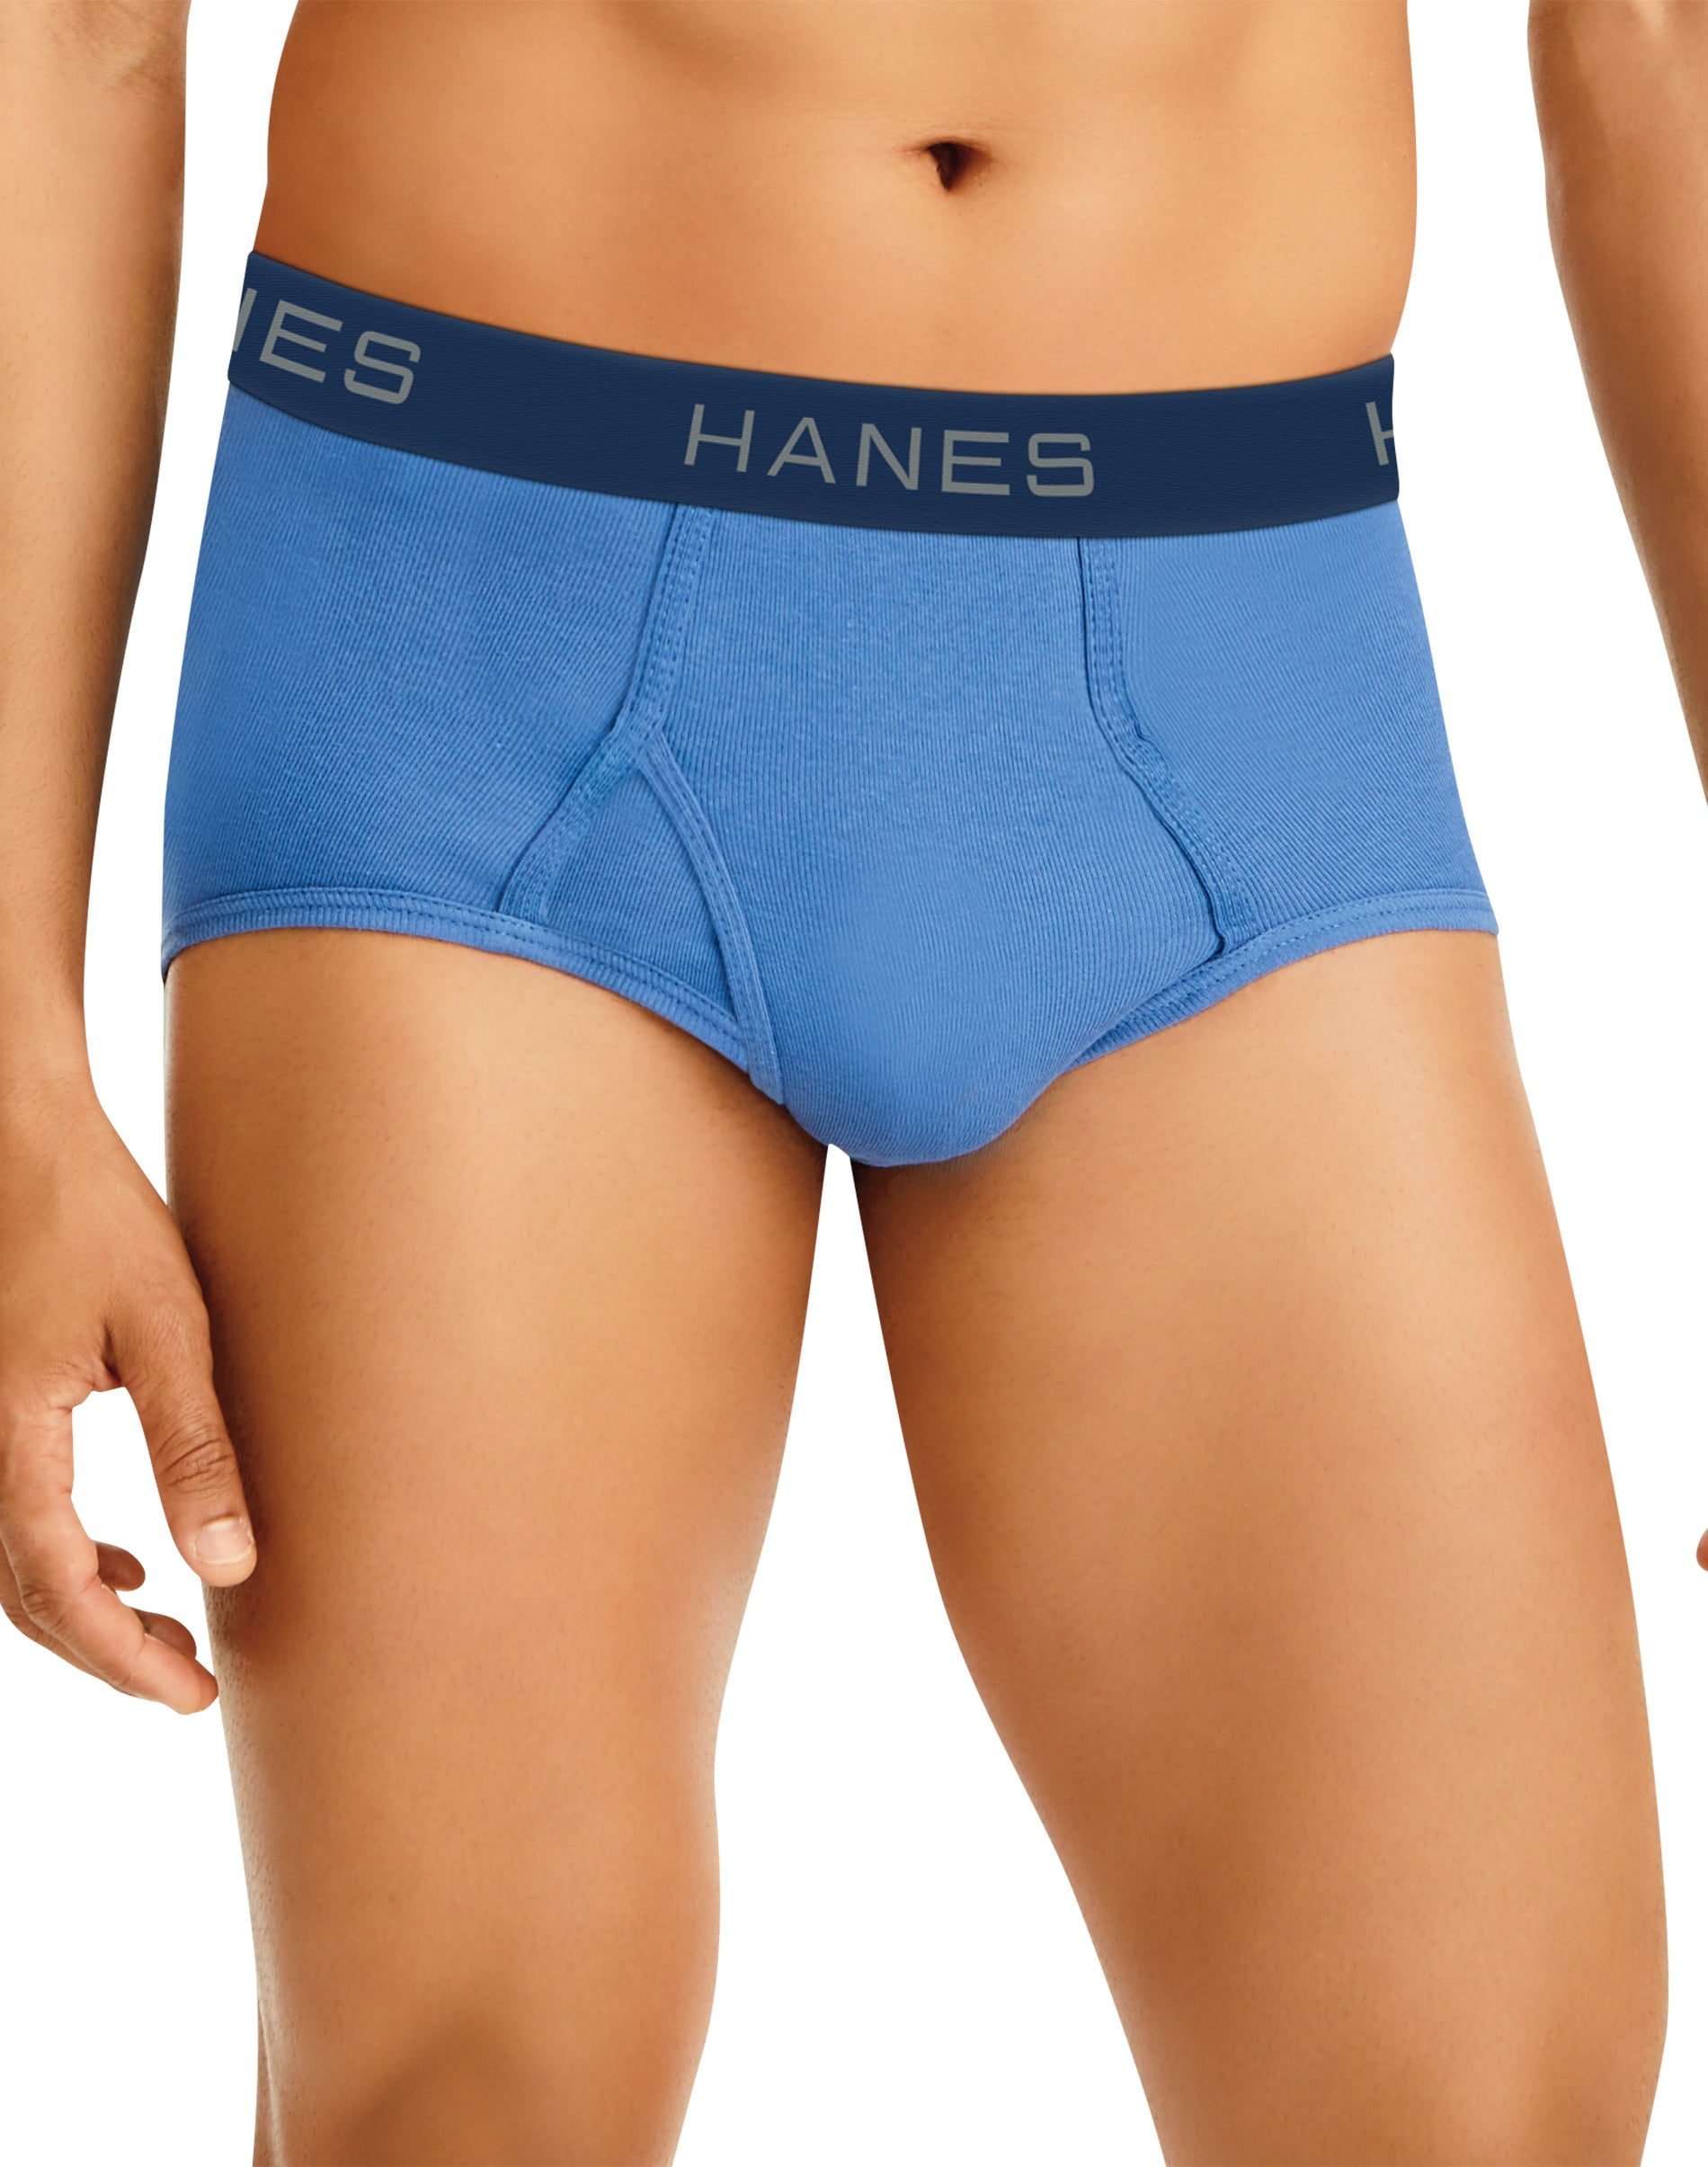 Hanes Ultimate Men's Brief Underwear Pack, Full-Rise, Moisture